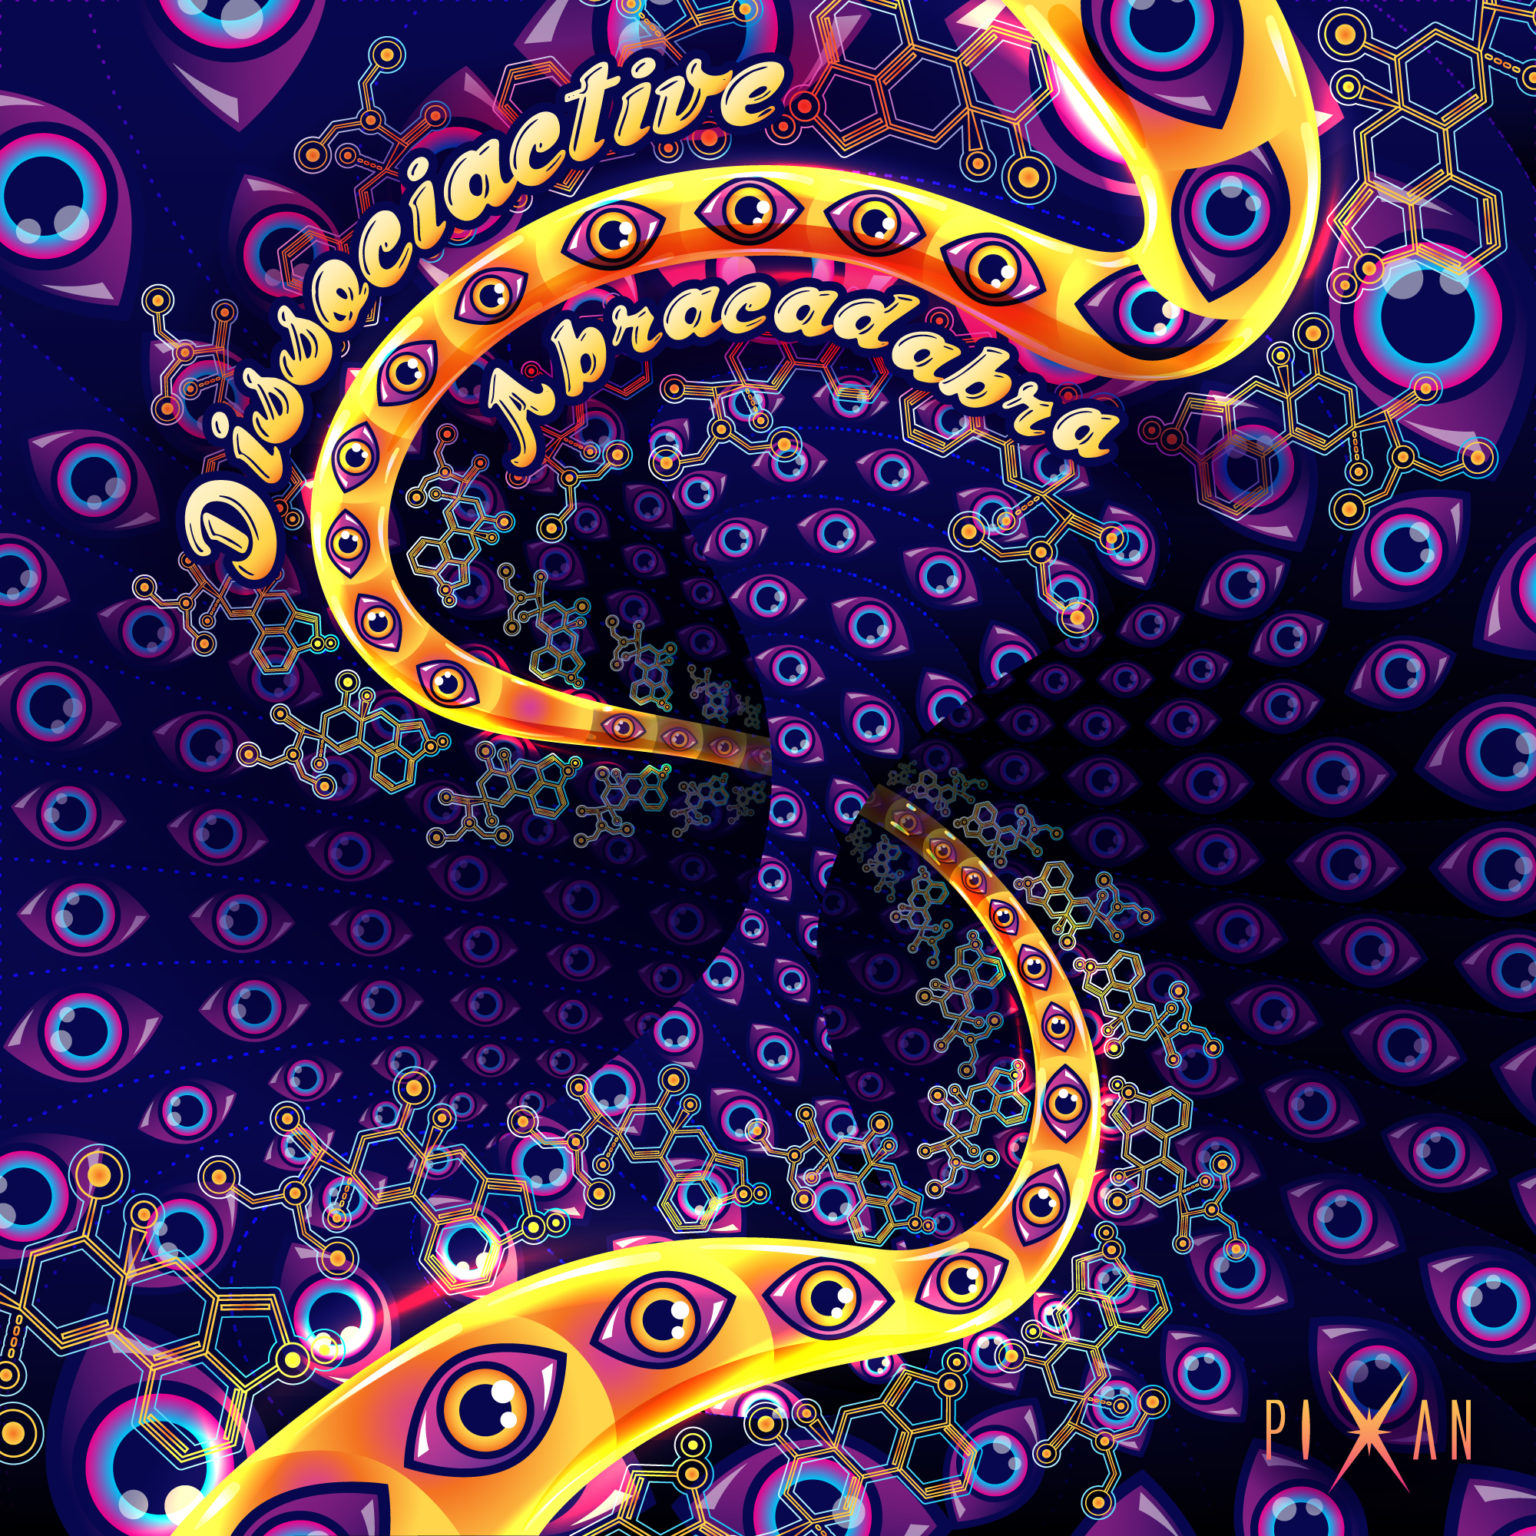 Dissociactive - Abracadabra - Digital EP Cover Art and Design